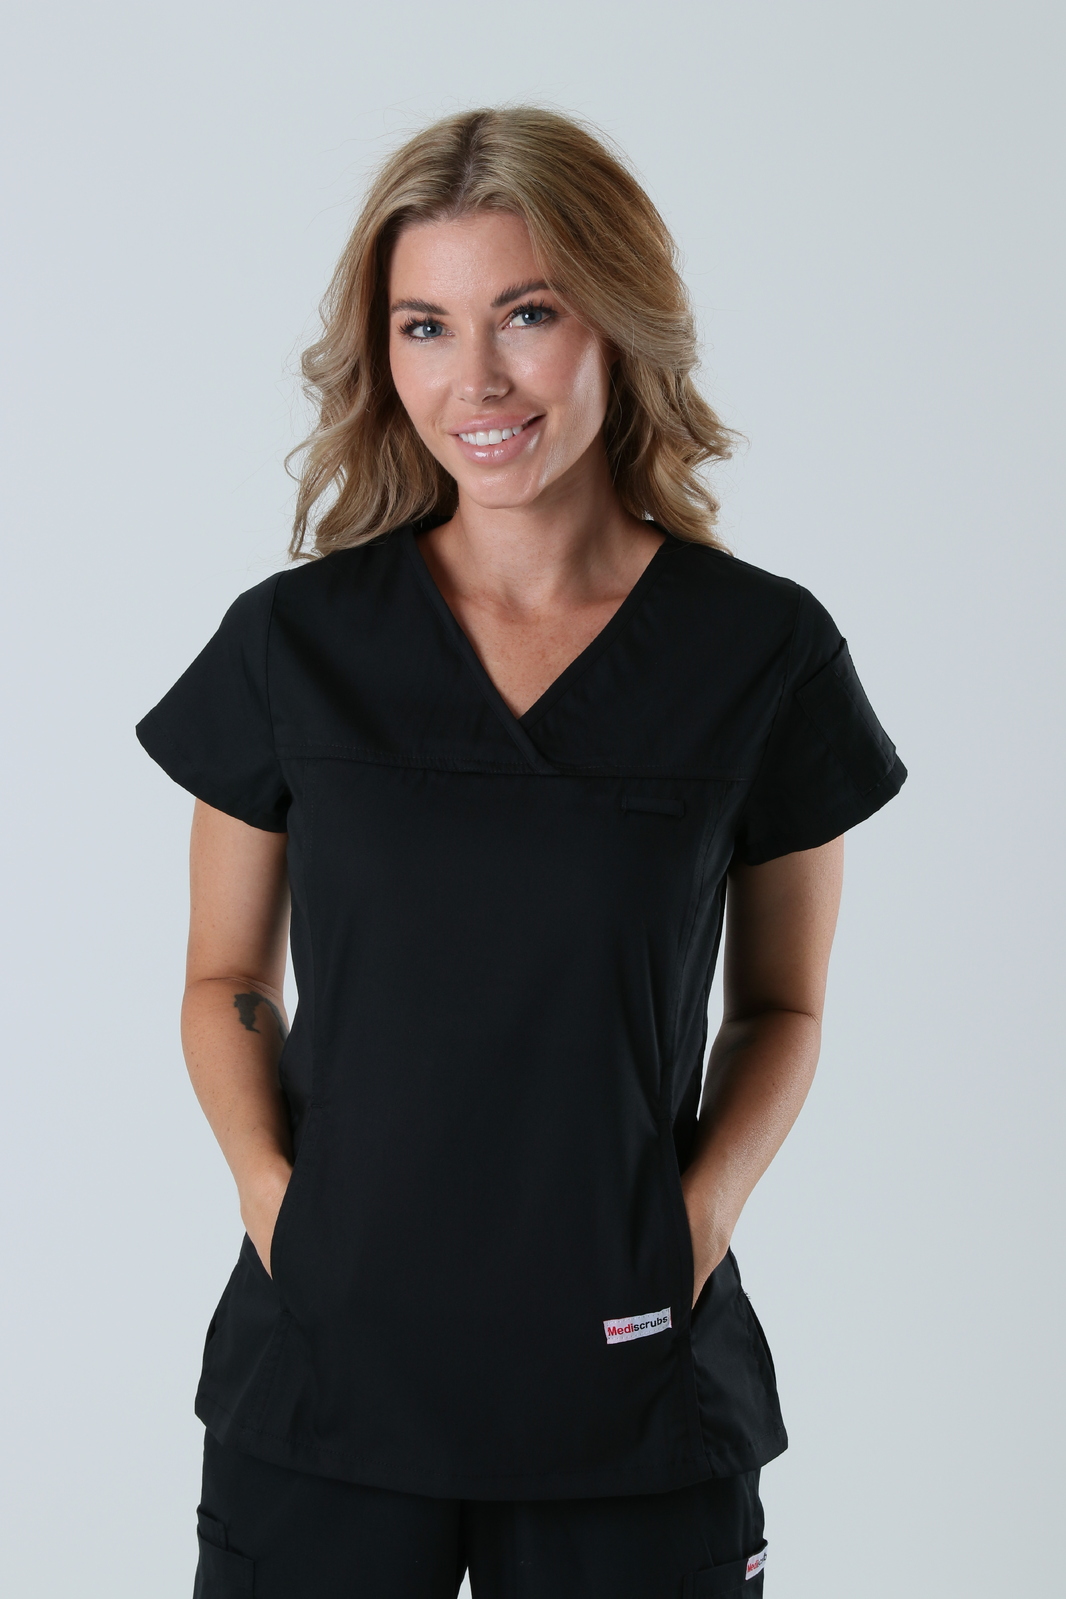 Canberra Hospital Medical Imaging Radiographer Uniform Top Only Bundle (Women's Fit Solid Top in Black + Logos)